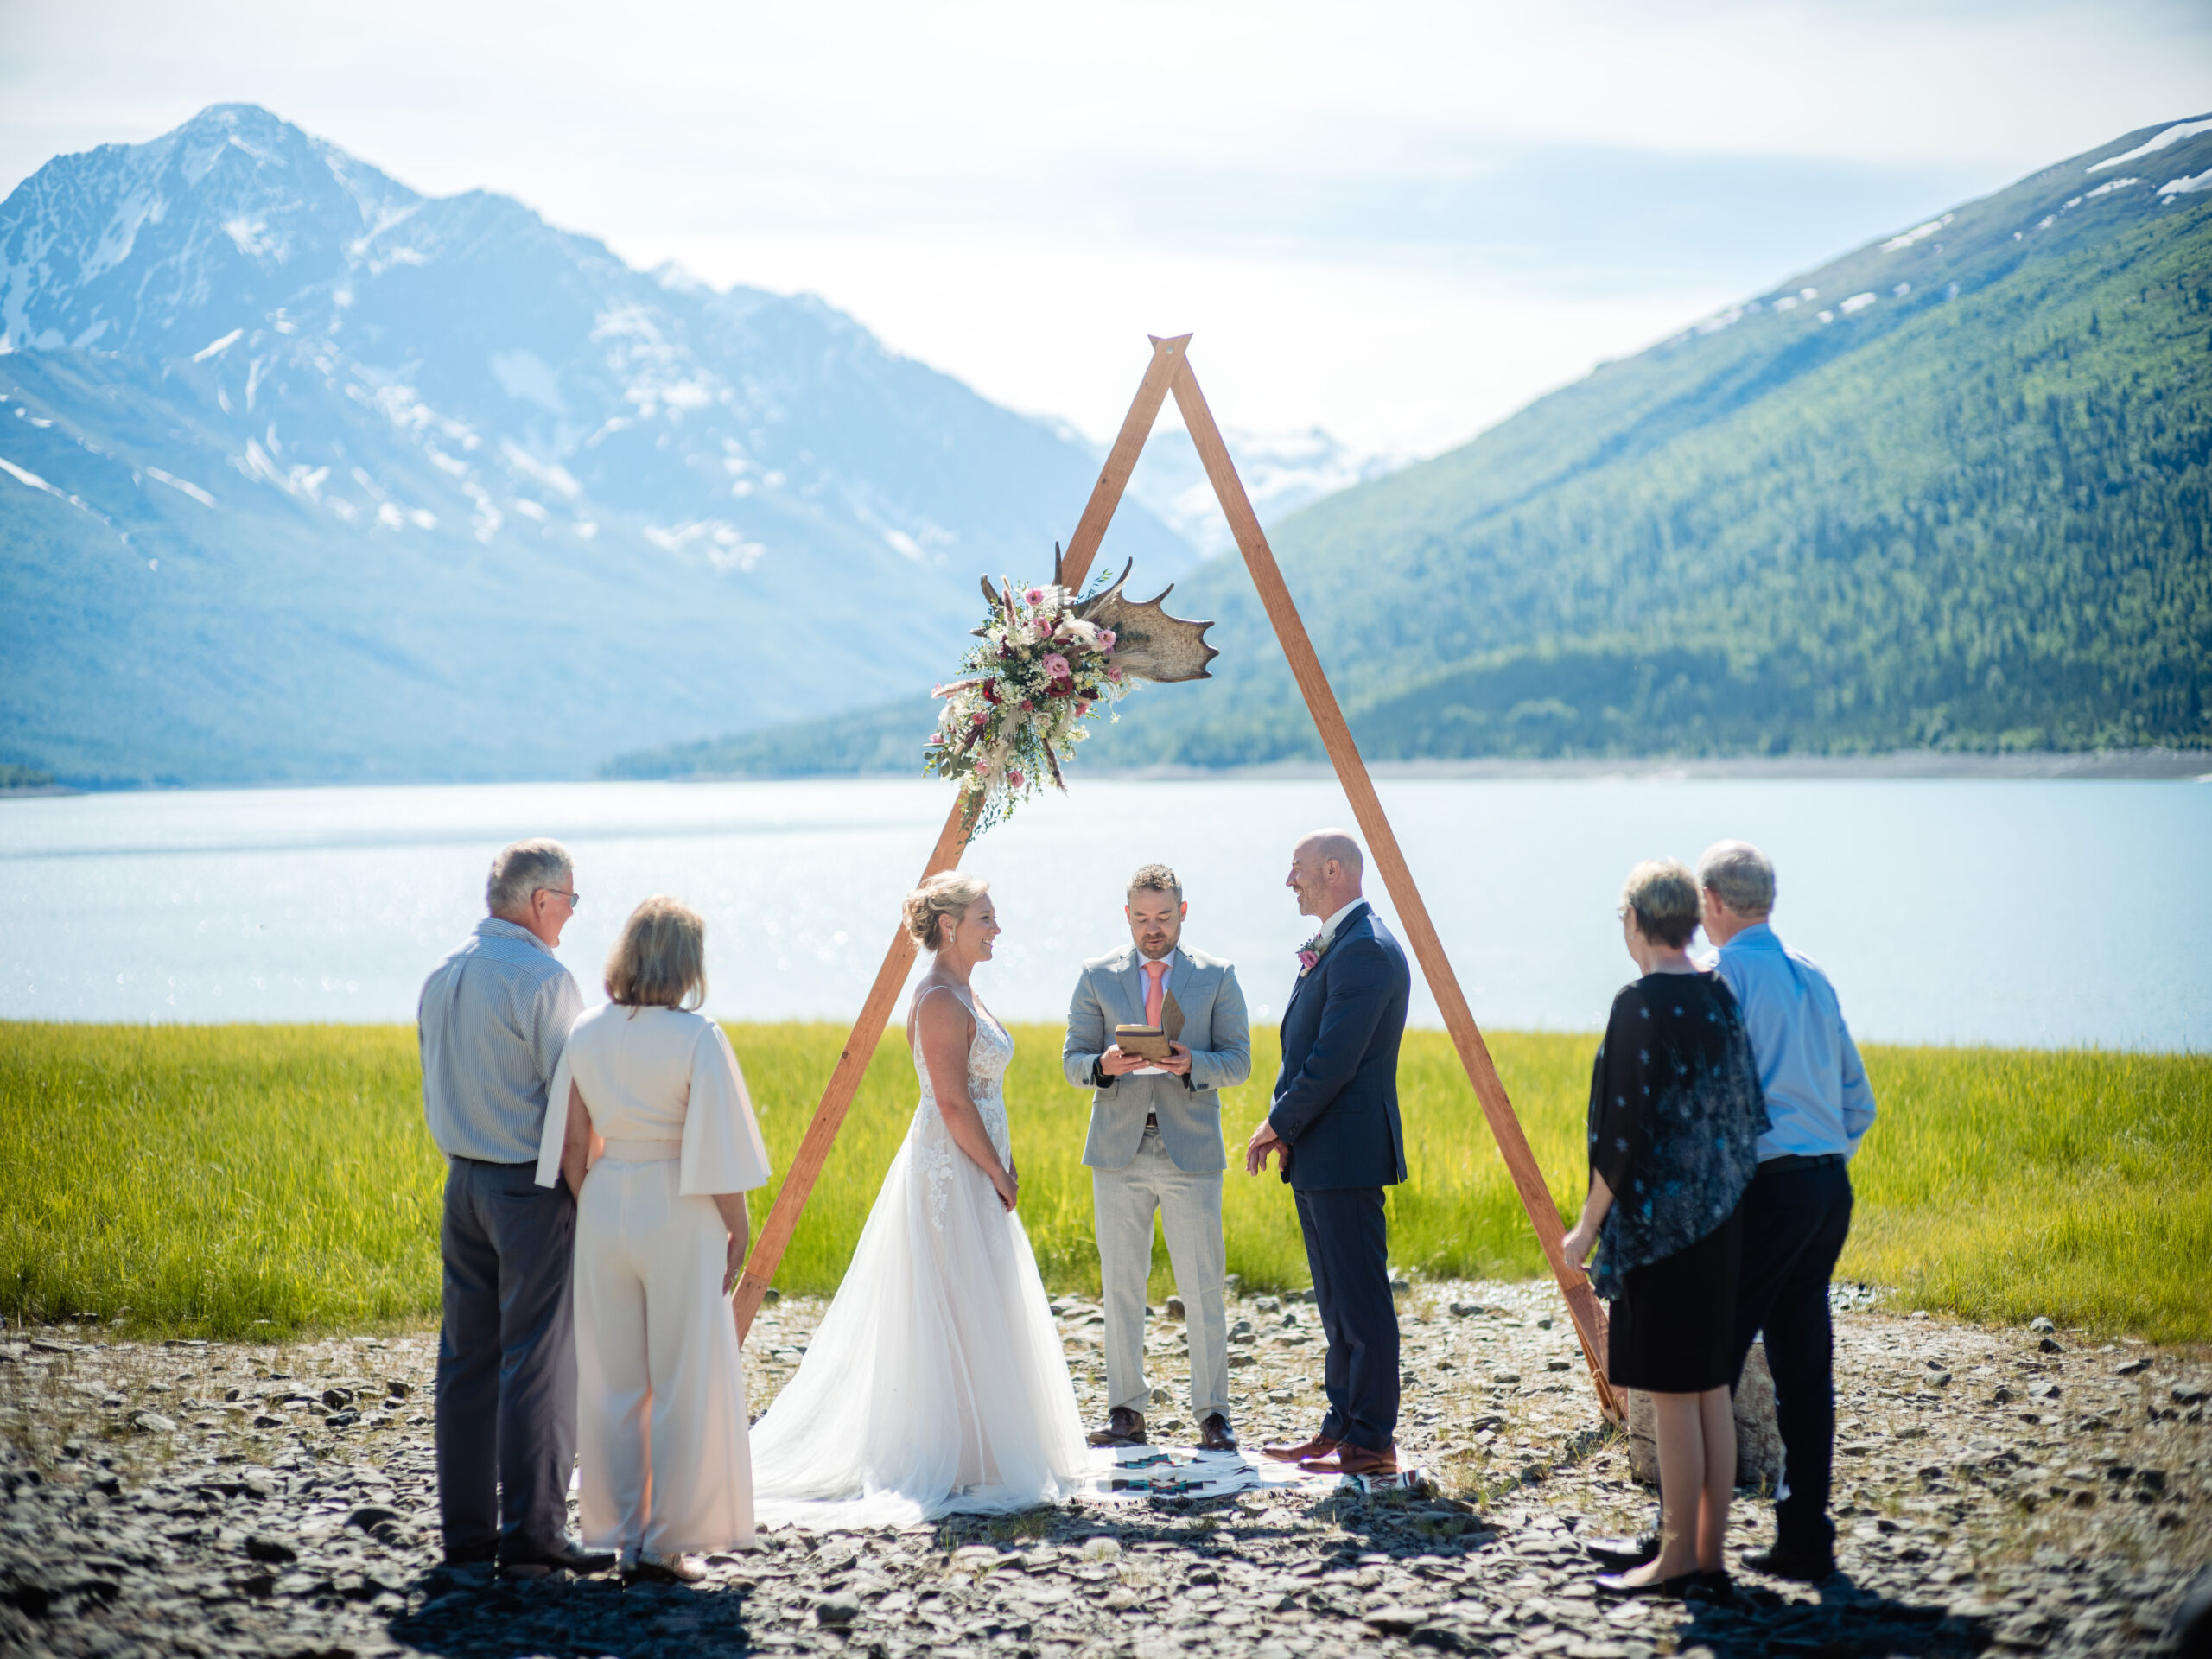 Wedding Image by Chugach Peaks Photography in Alaska